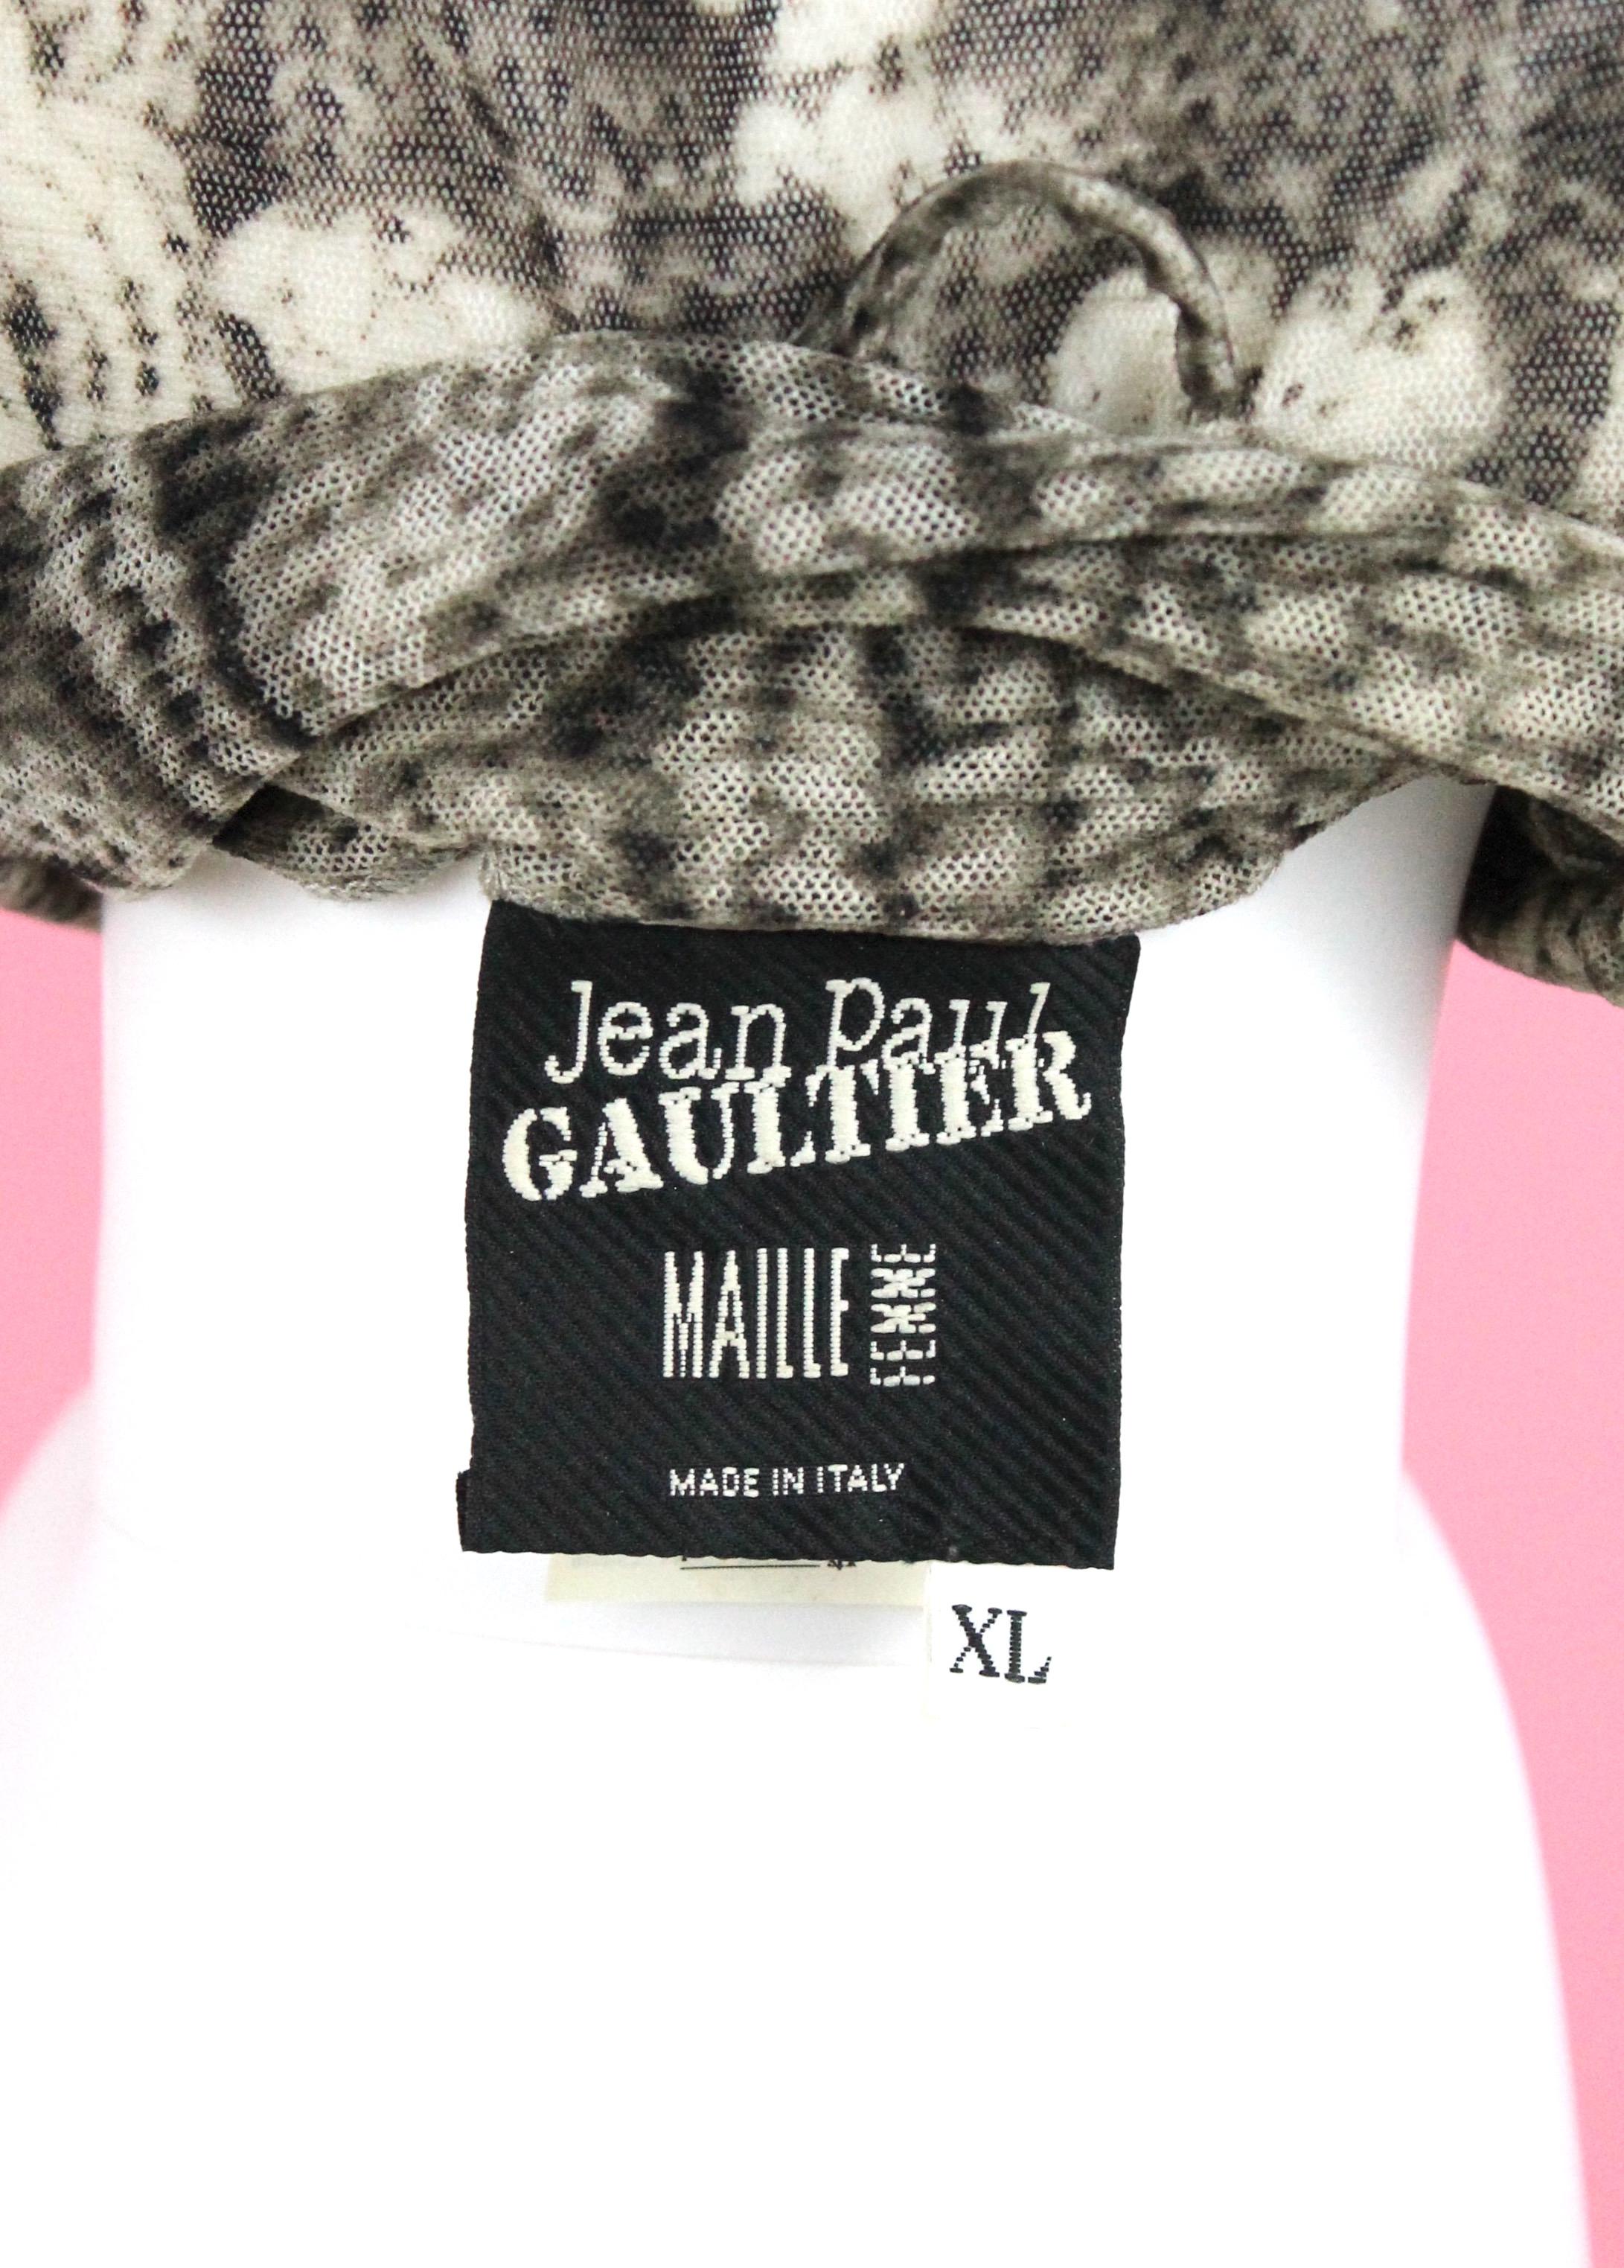 Jean Paul Gaultier Maille Knit Sweater Set 2